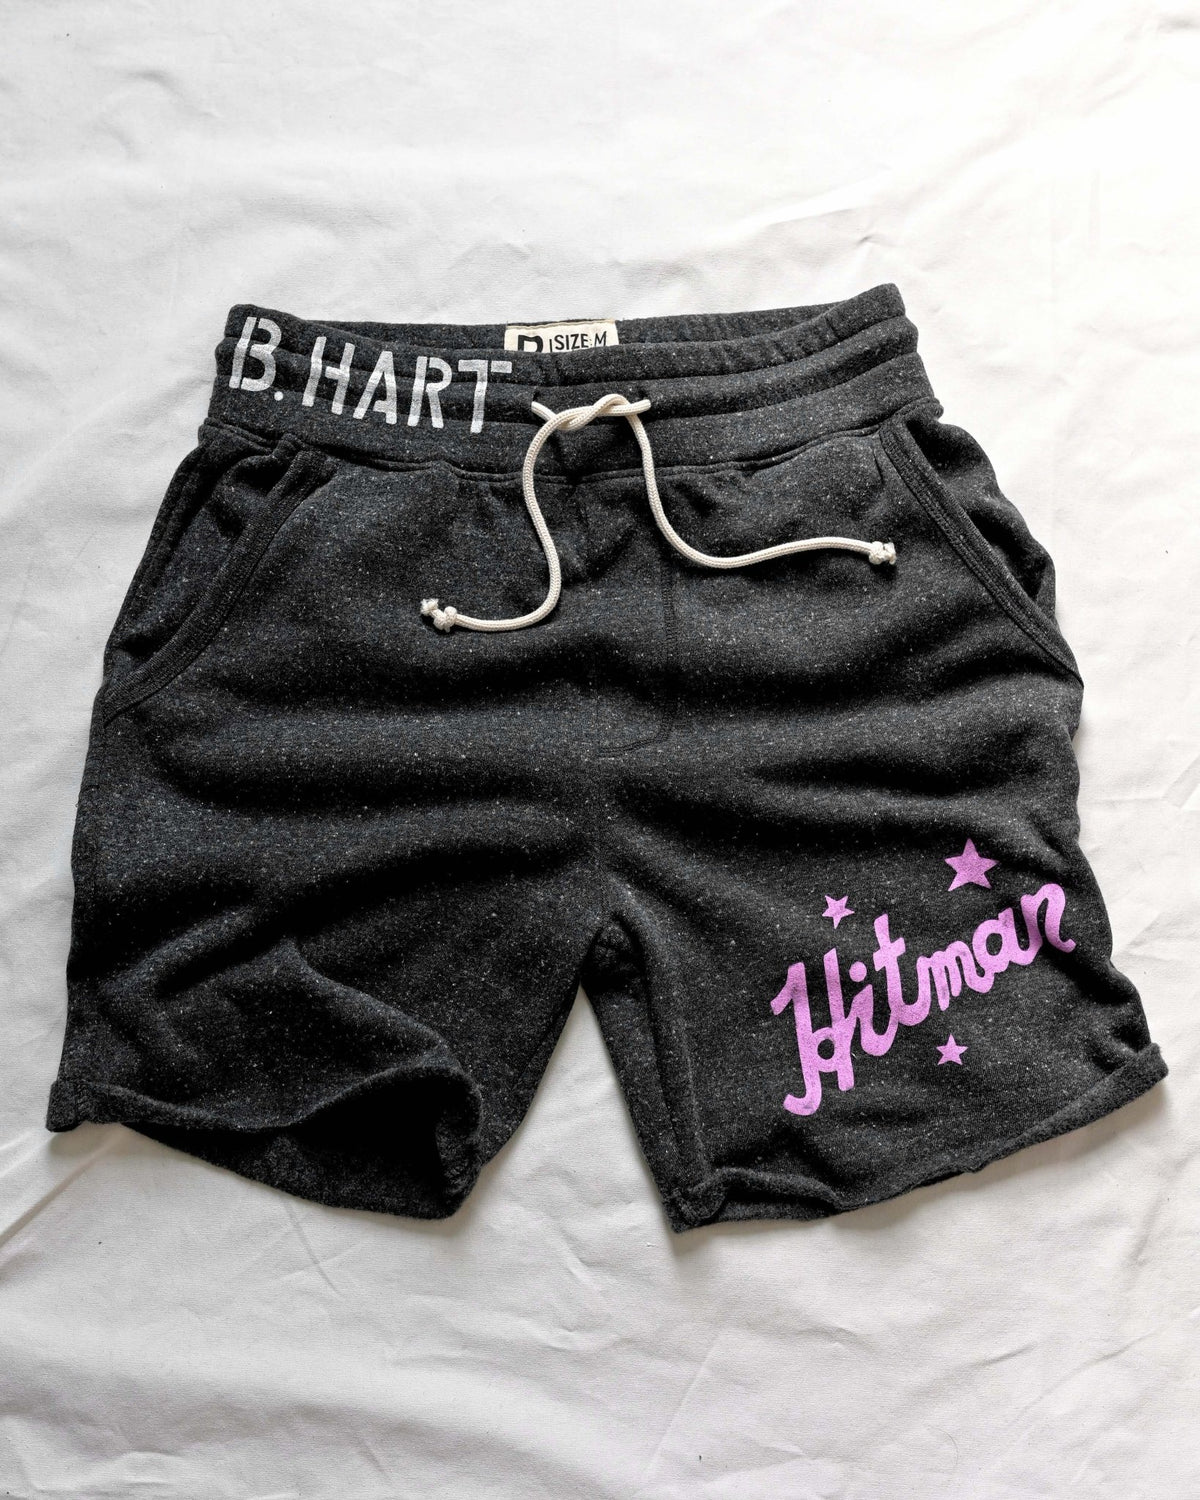 Bret Hart Hitman Black Shorts - Roots of Fight Canada